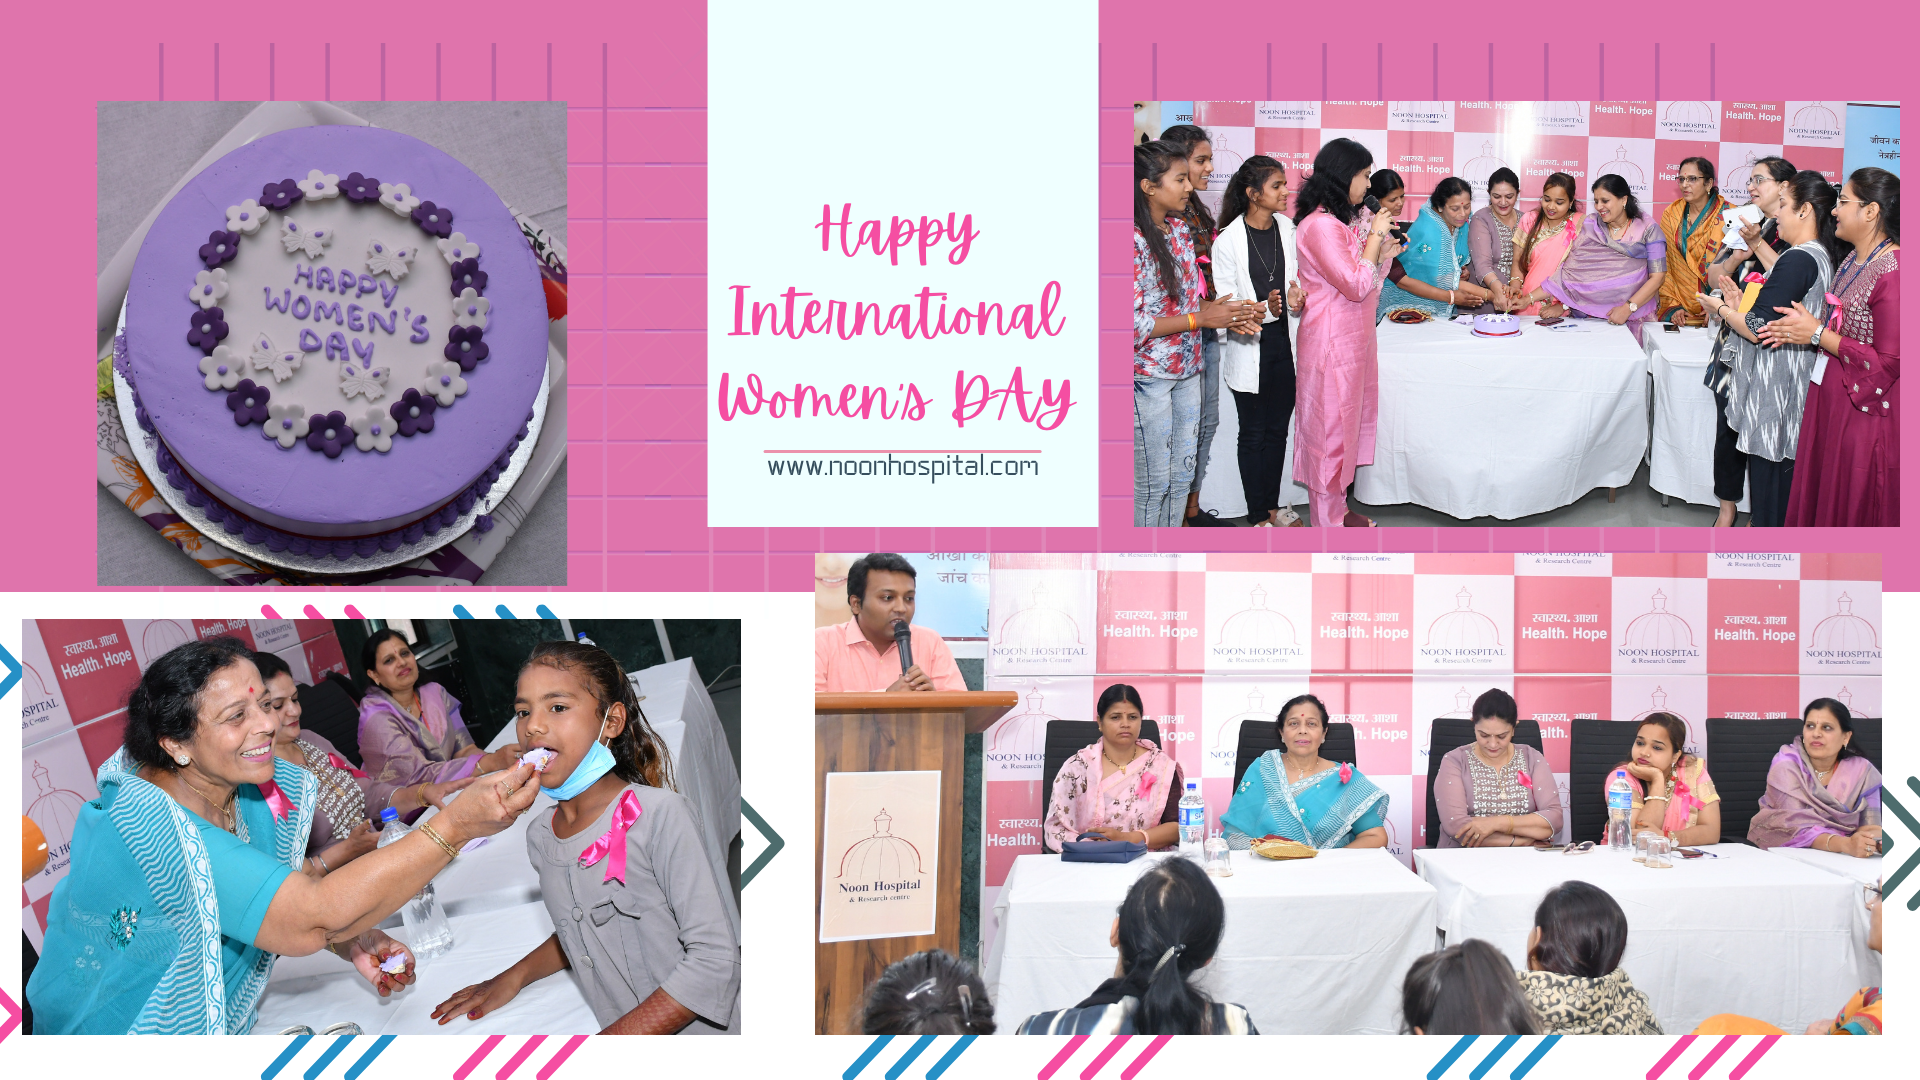 Noon Hospital Celebrated ‘International Women’s Day’